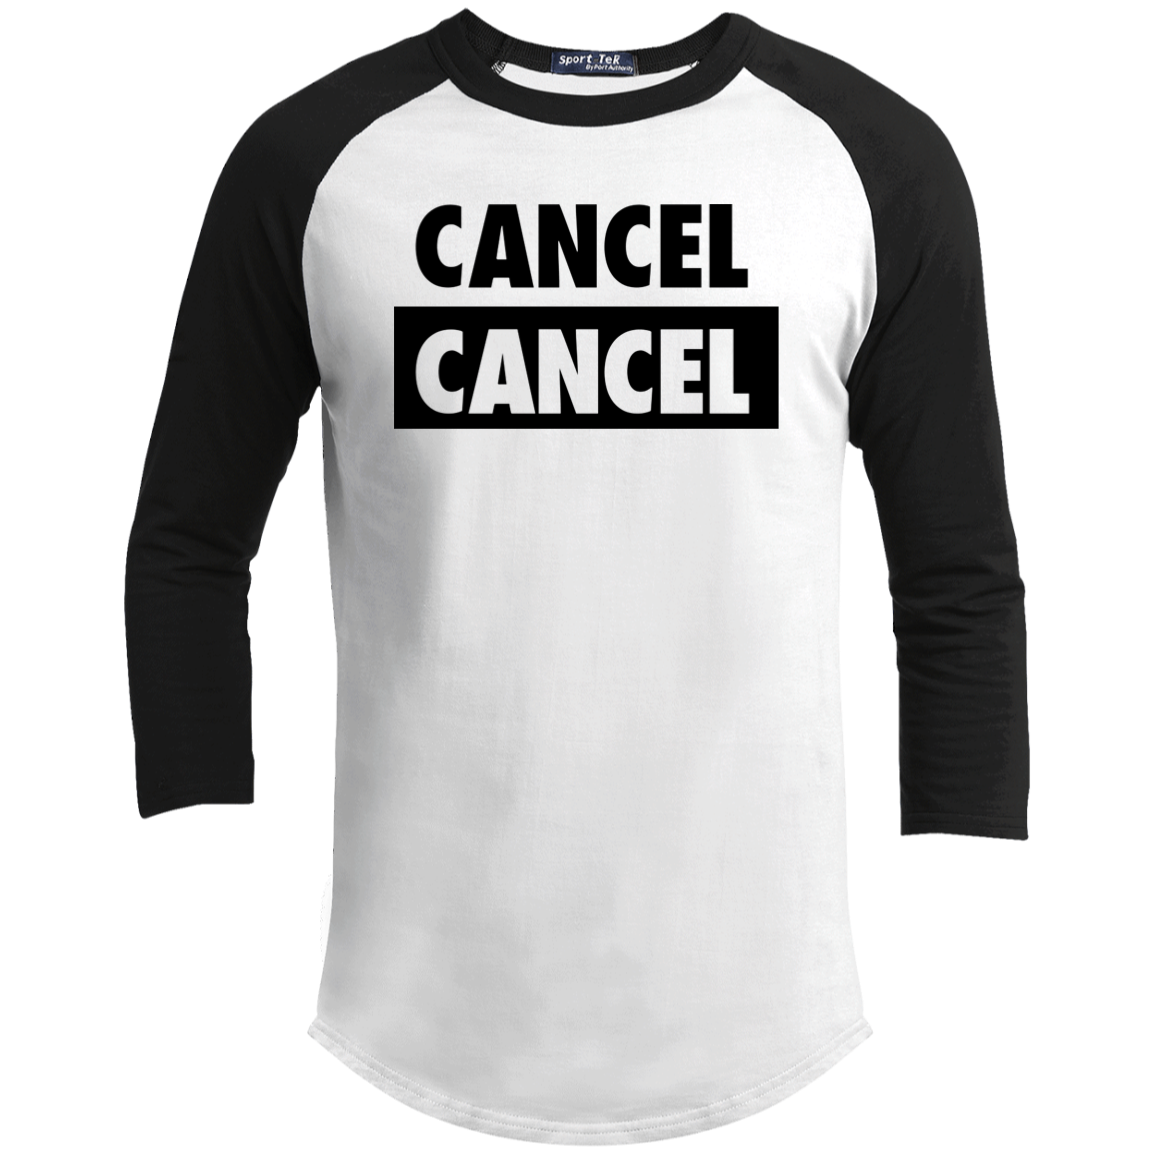 ArtichokeUSA Custom Design. CANCEL. CANCEL. Youth 3/4 Raglan Sleeve Shirt